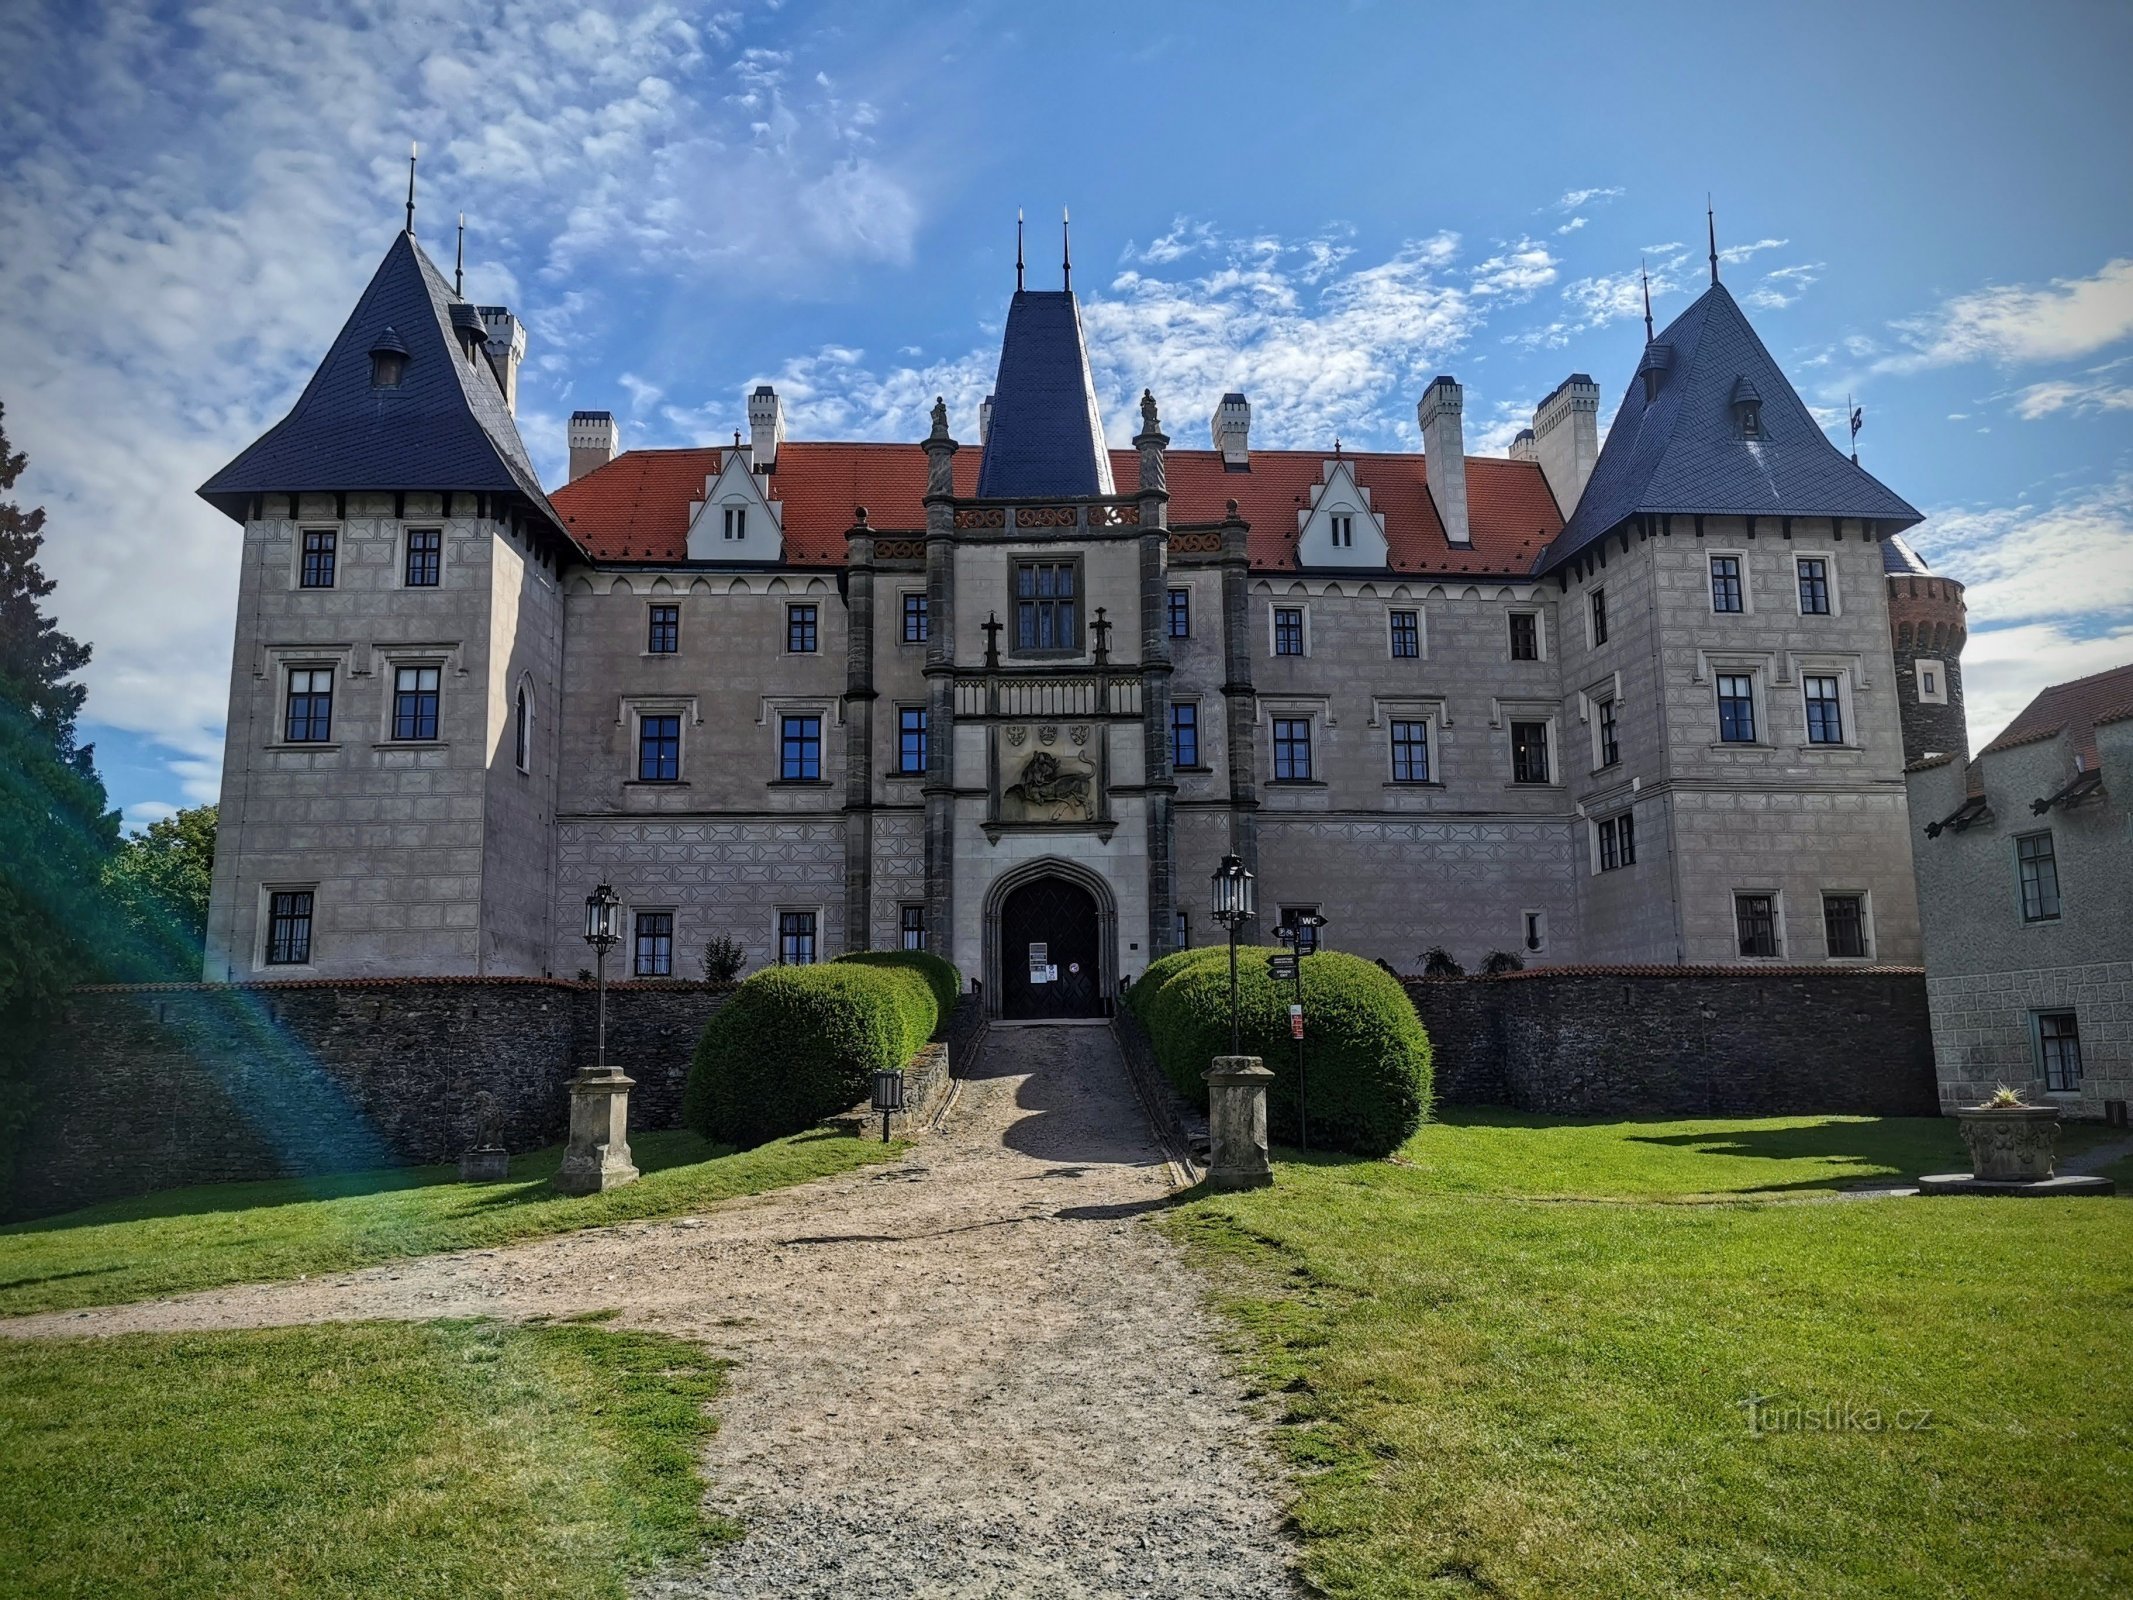 Žleby Chateau